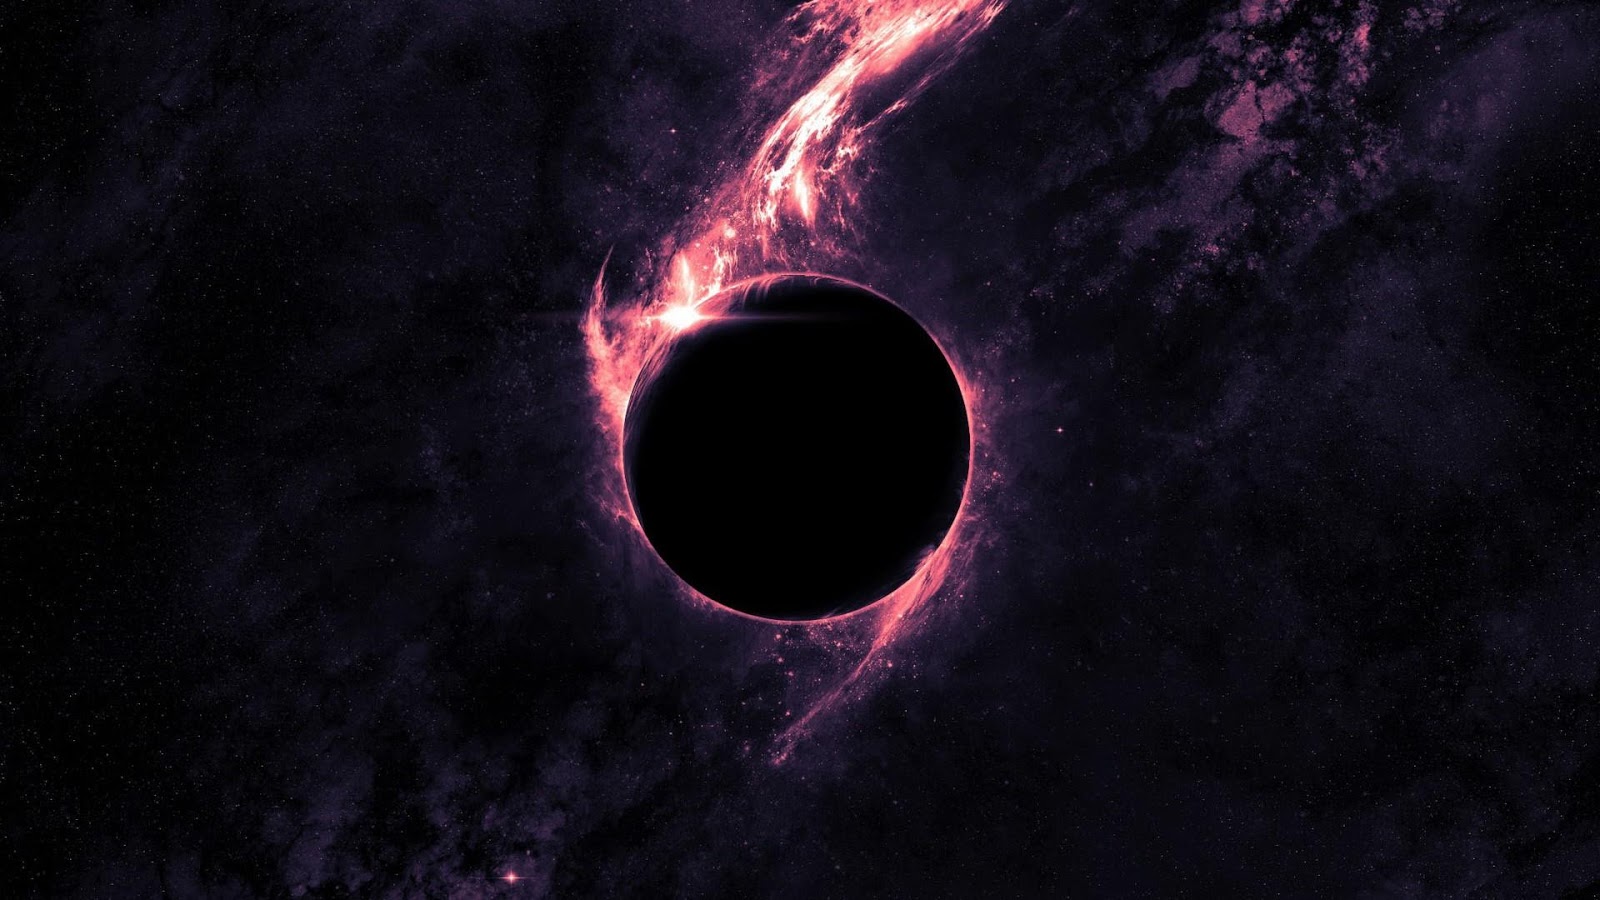 Black Hole Live Wallpaper Universe App High Quality A